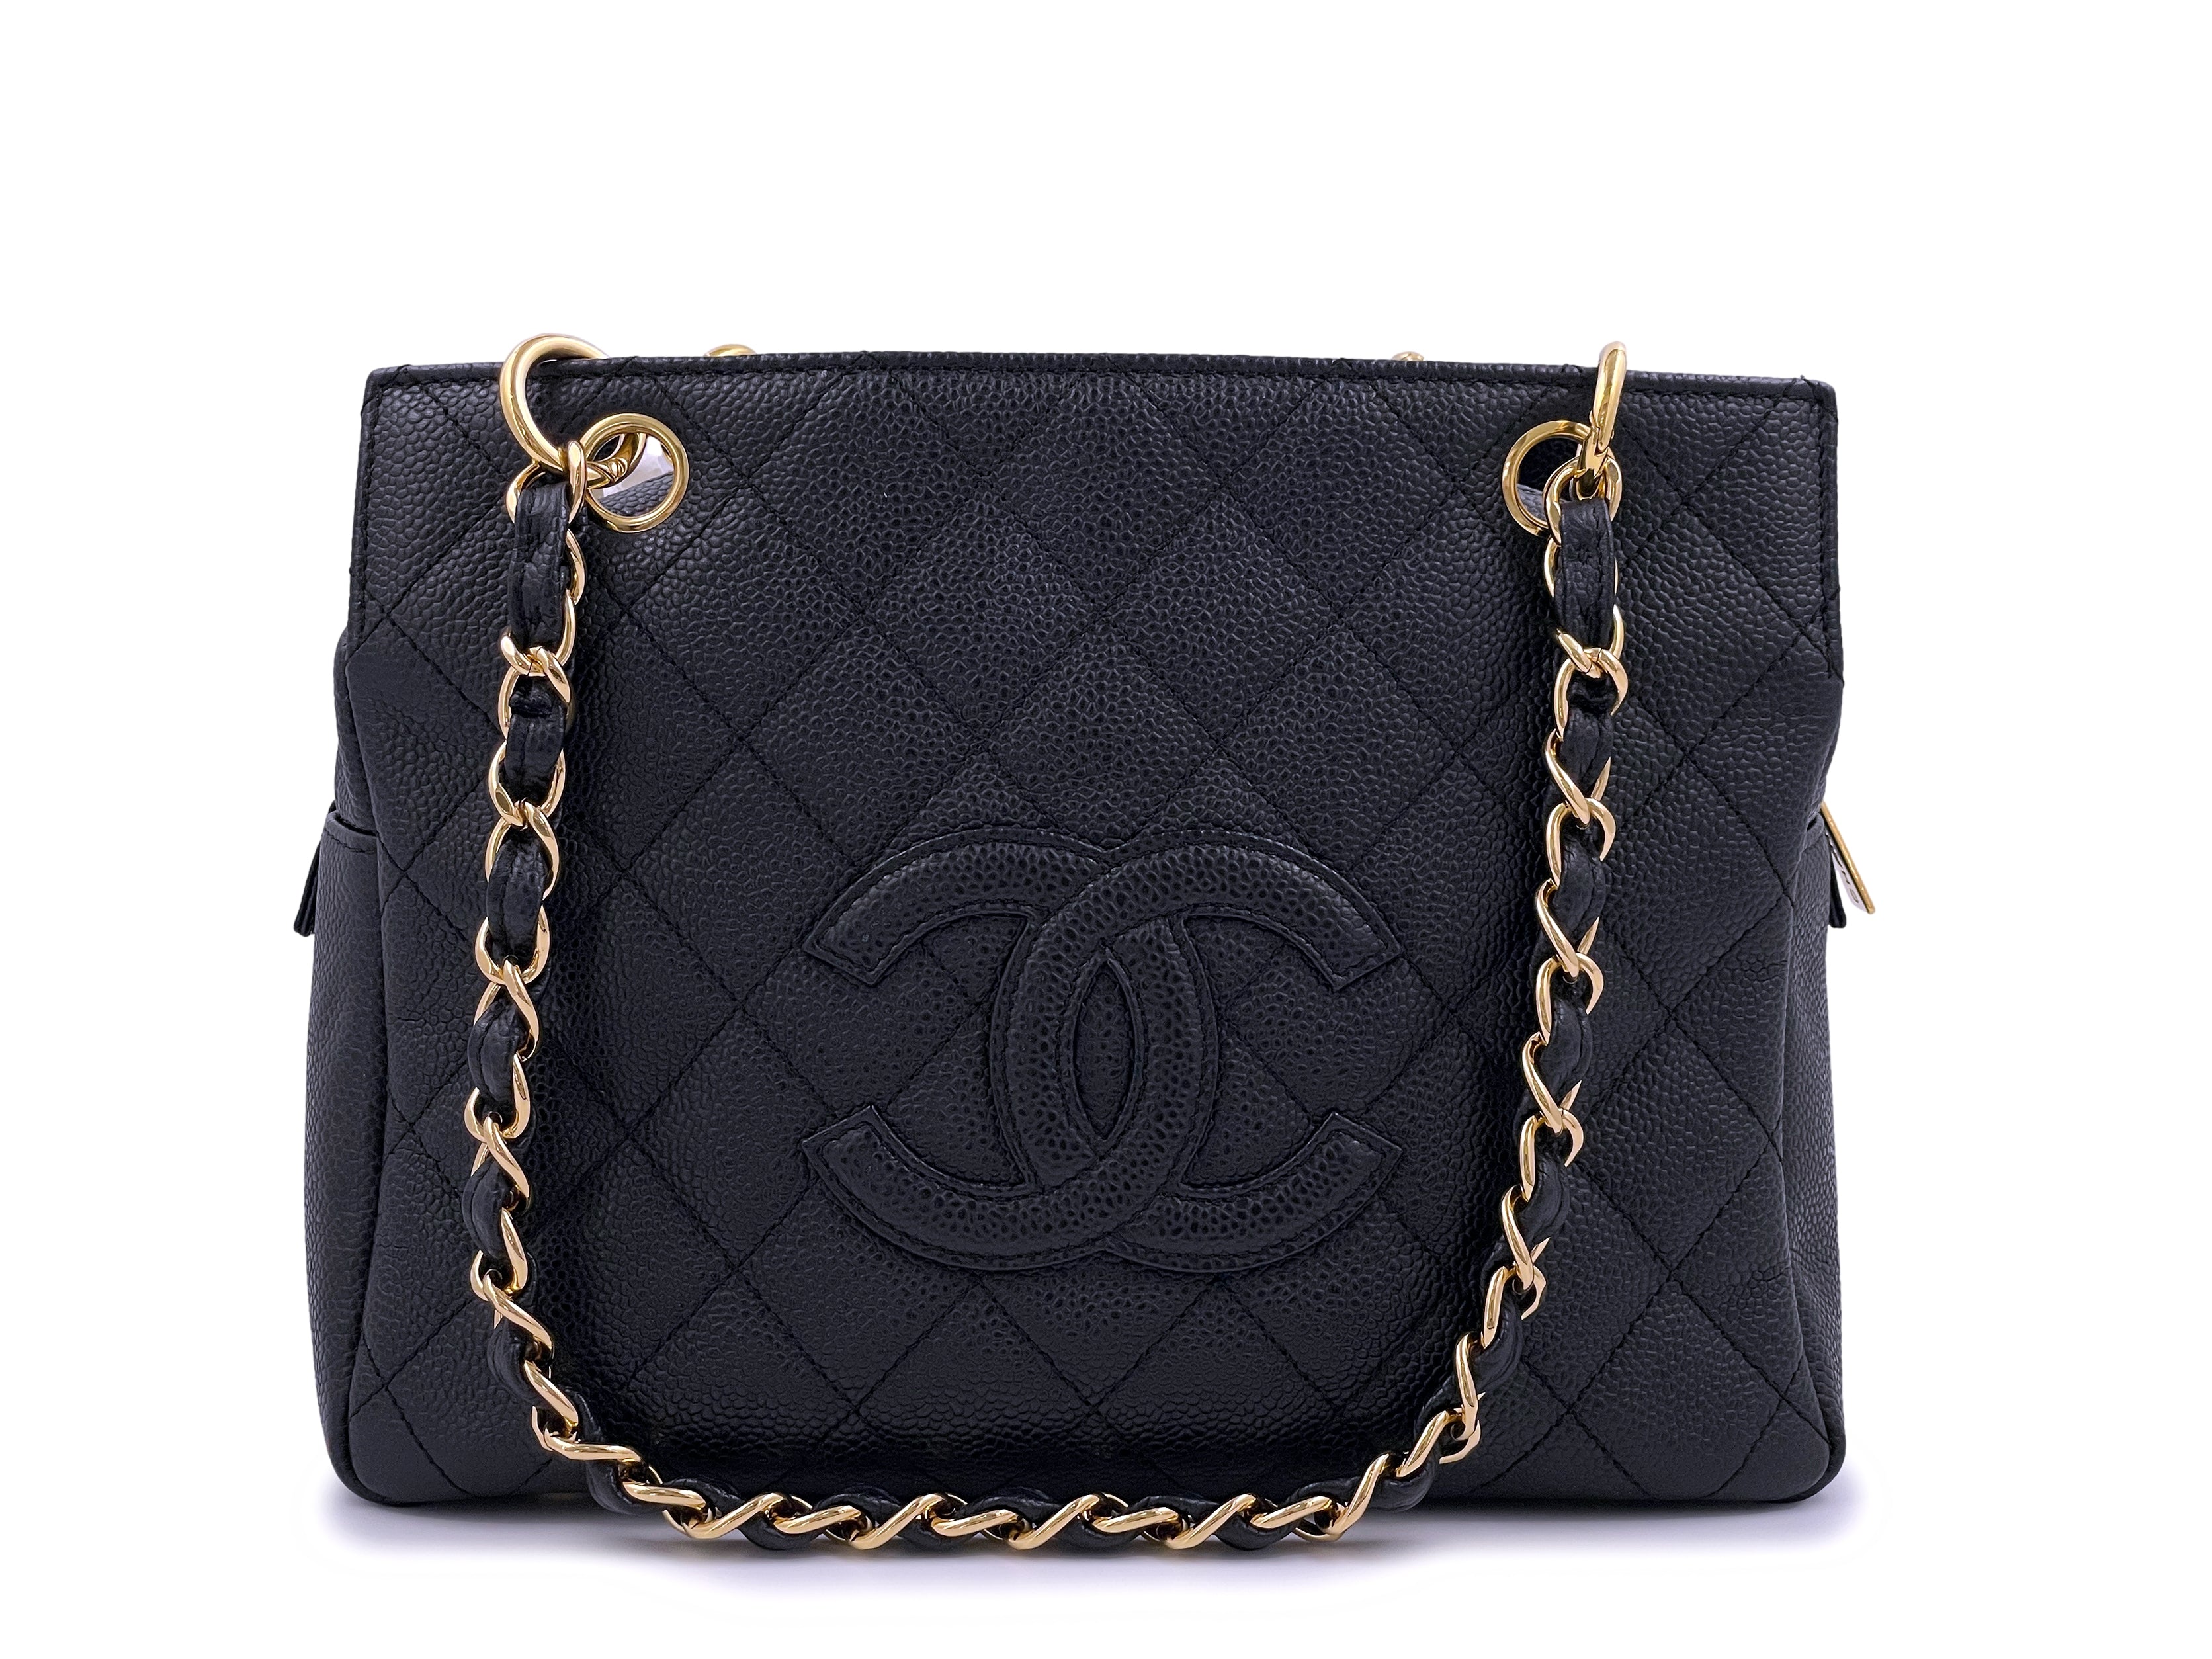 Chanel Vintage - Caviar Petit Timeless Shopping Tote Bag - Red - Caviar Leather  Handbag - Luxury High Quality - Avvenice